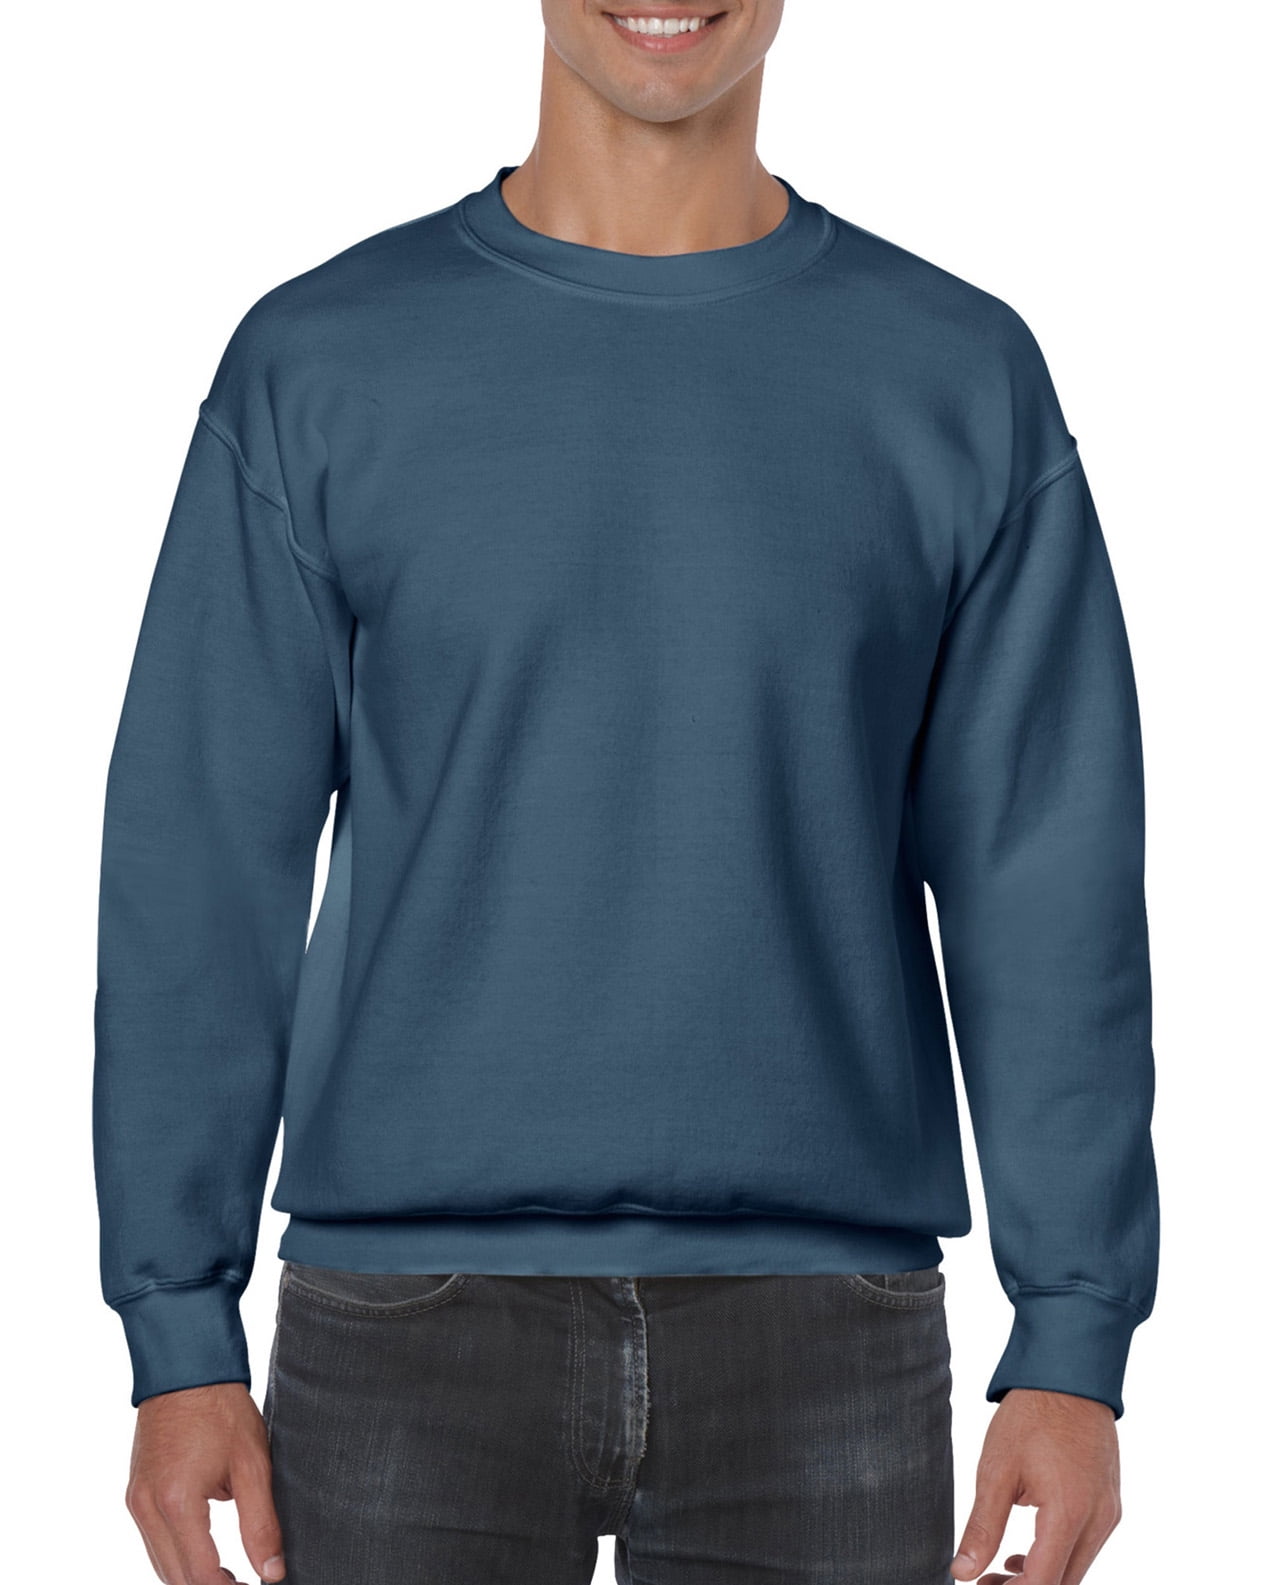 Gildan Men s Long Sleeve Crewneck Sweatshirt 18000